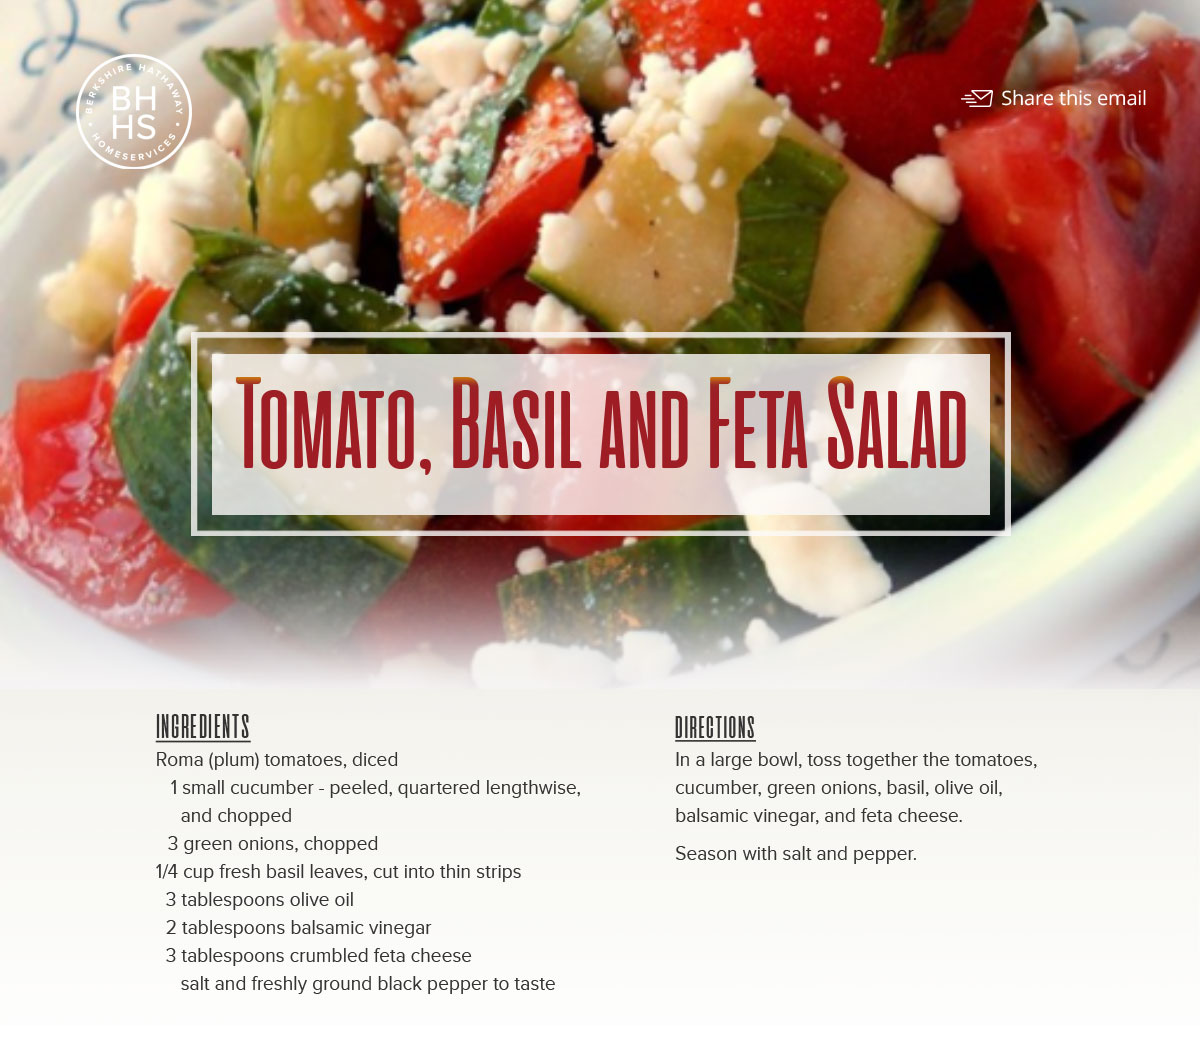 A simple refreshing salad recipe.